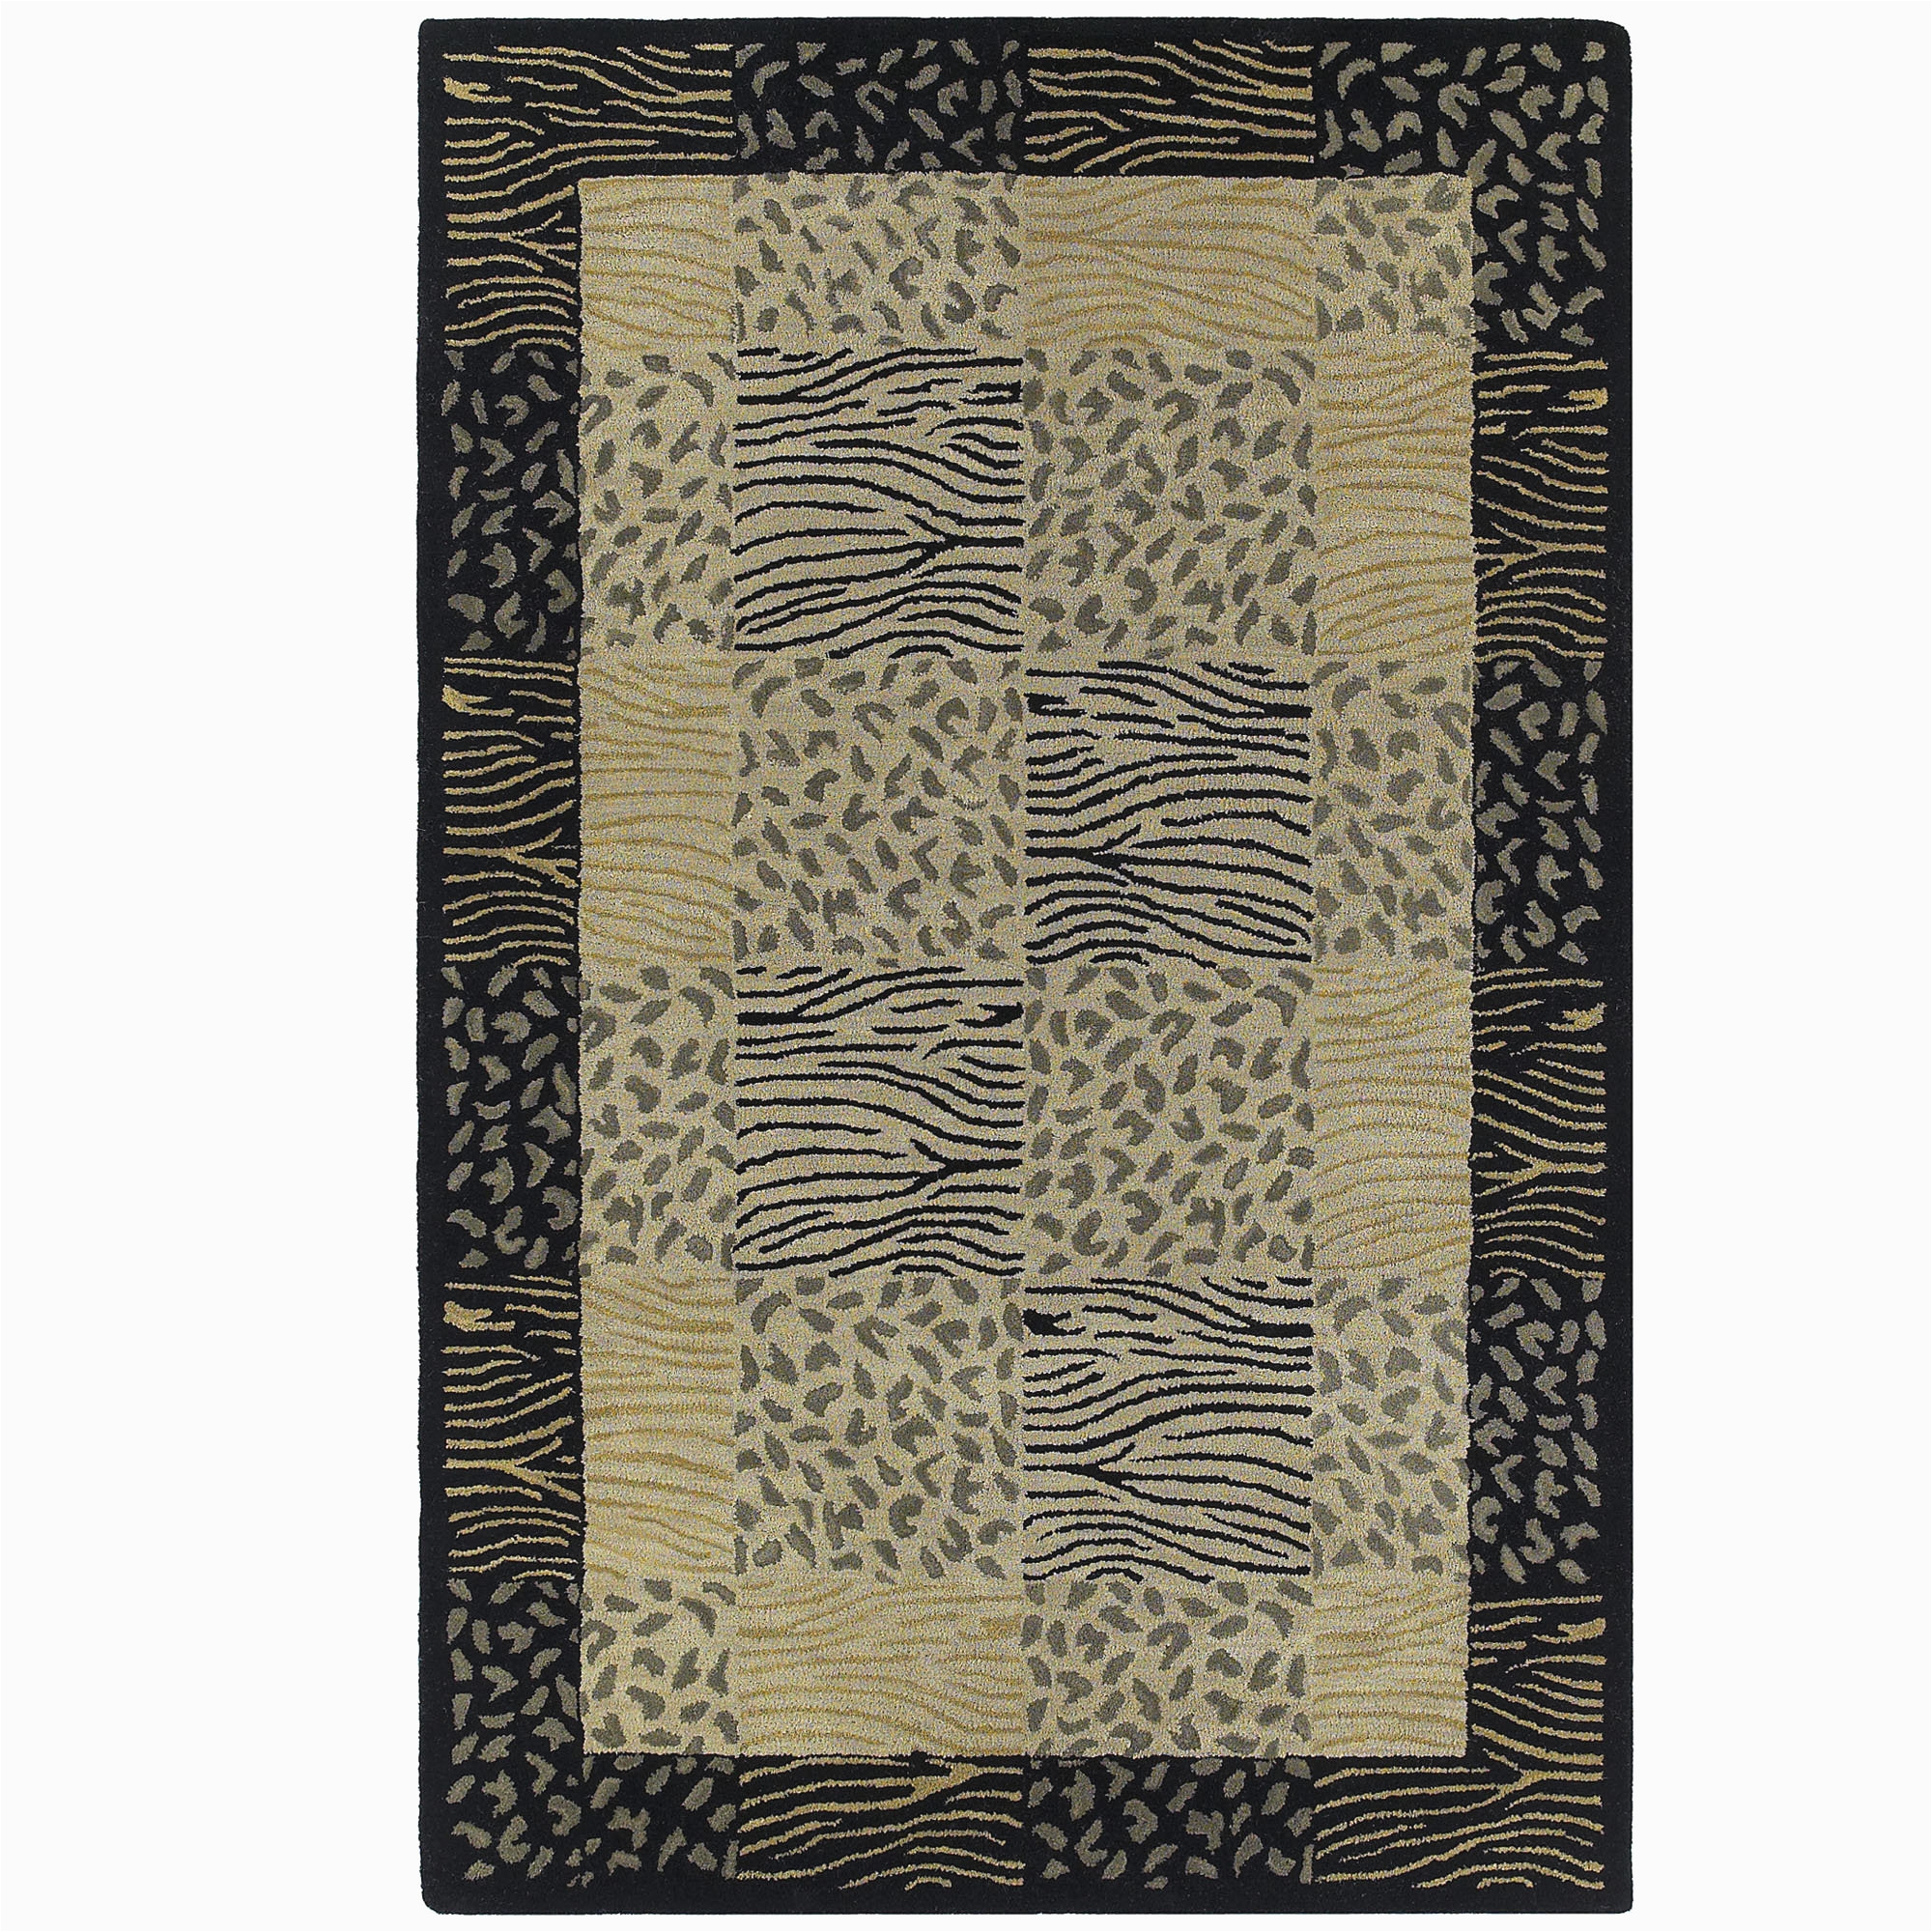 terrific round zebra print area rug